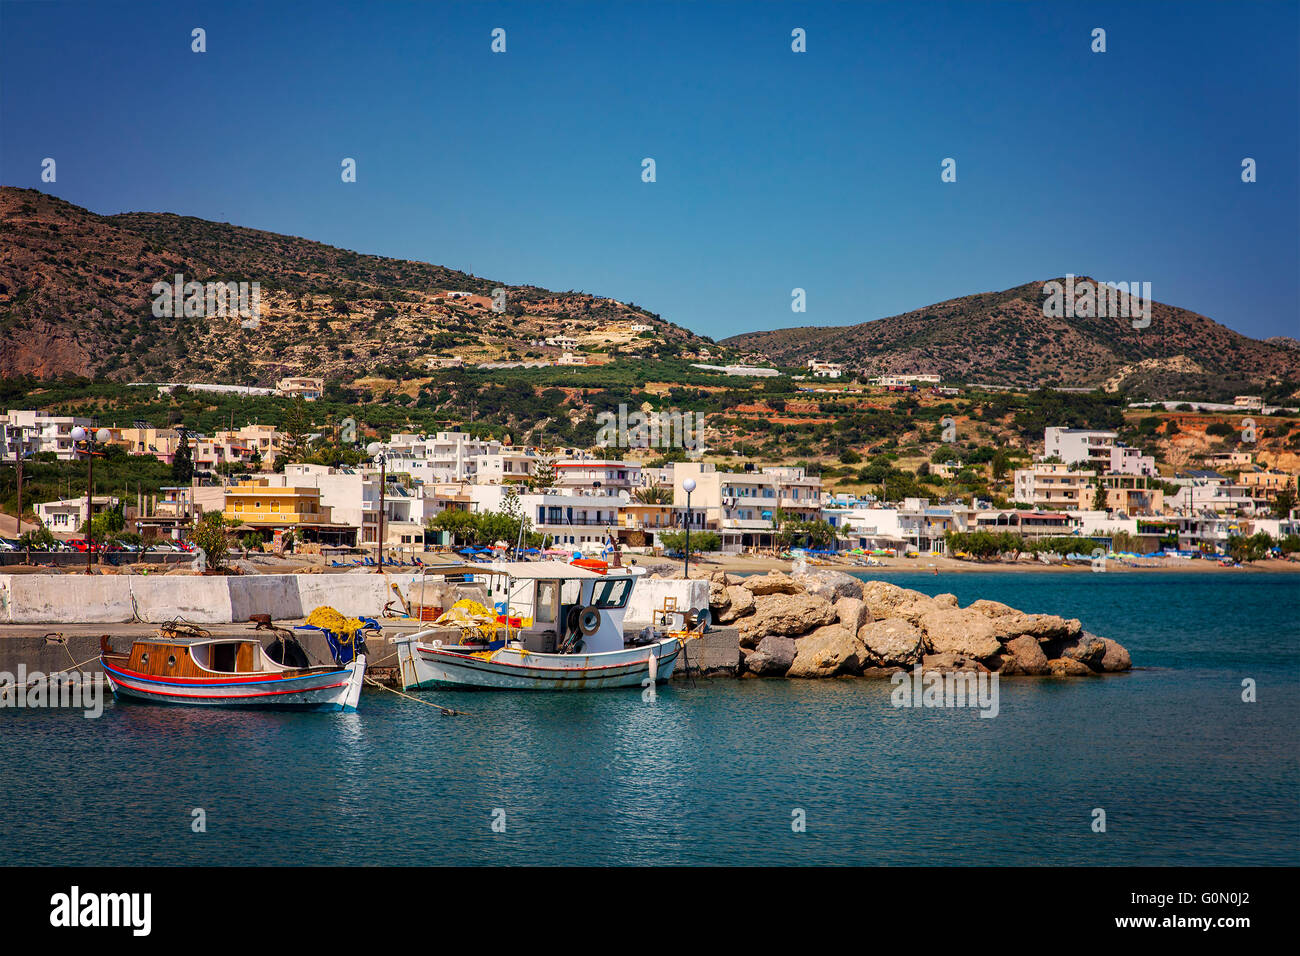 Image of the seaside town of Makrigialos, Crete. Stock Photo